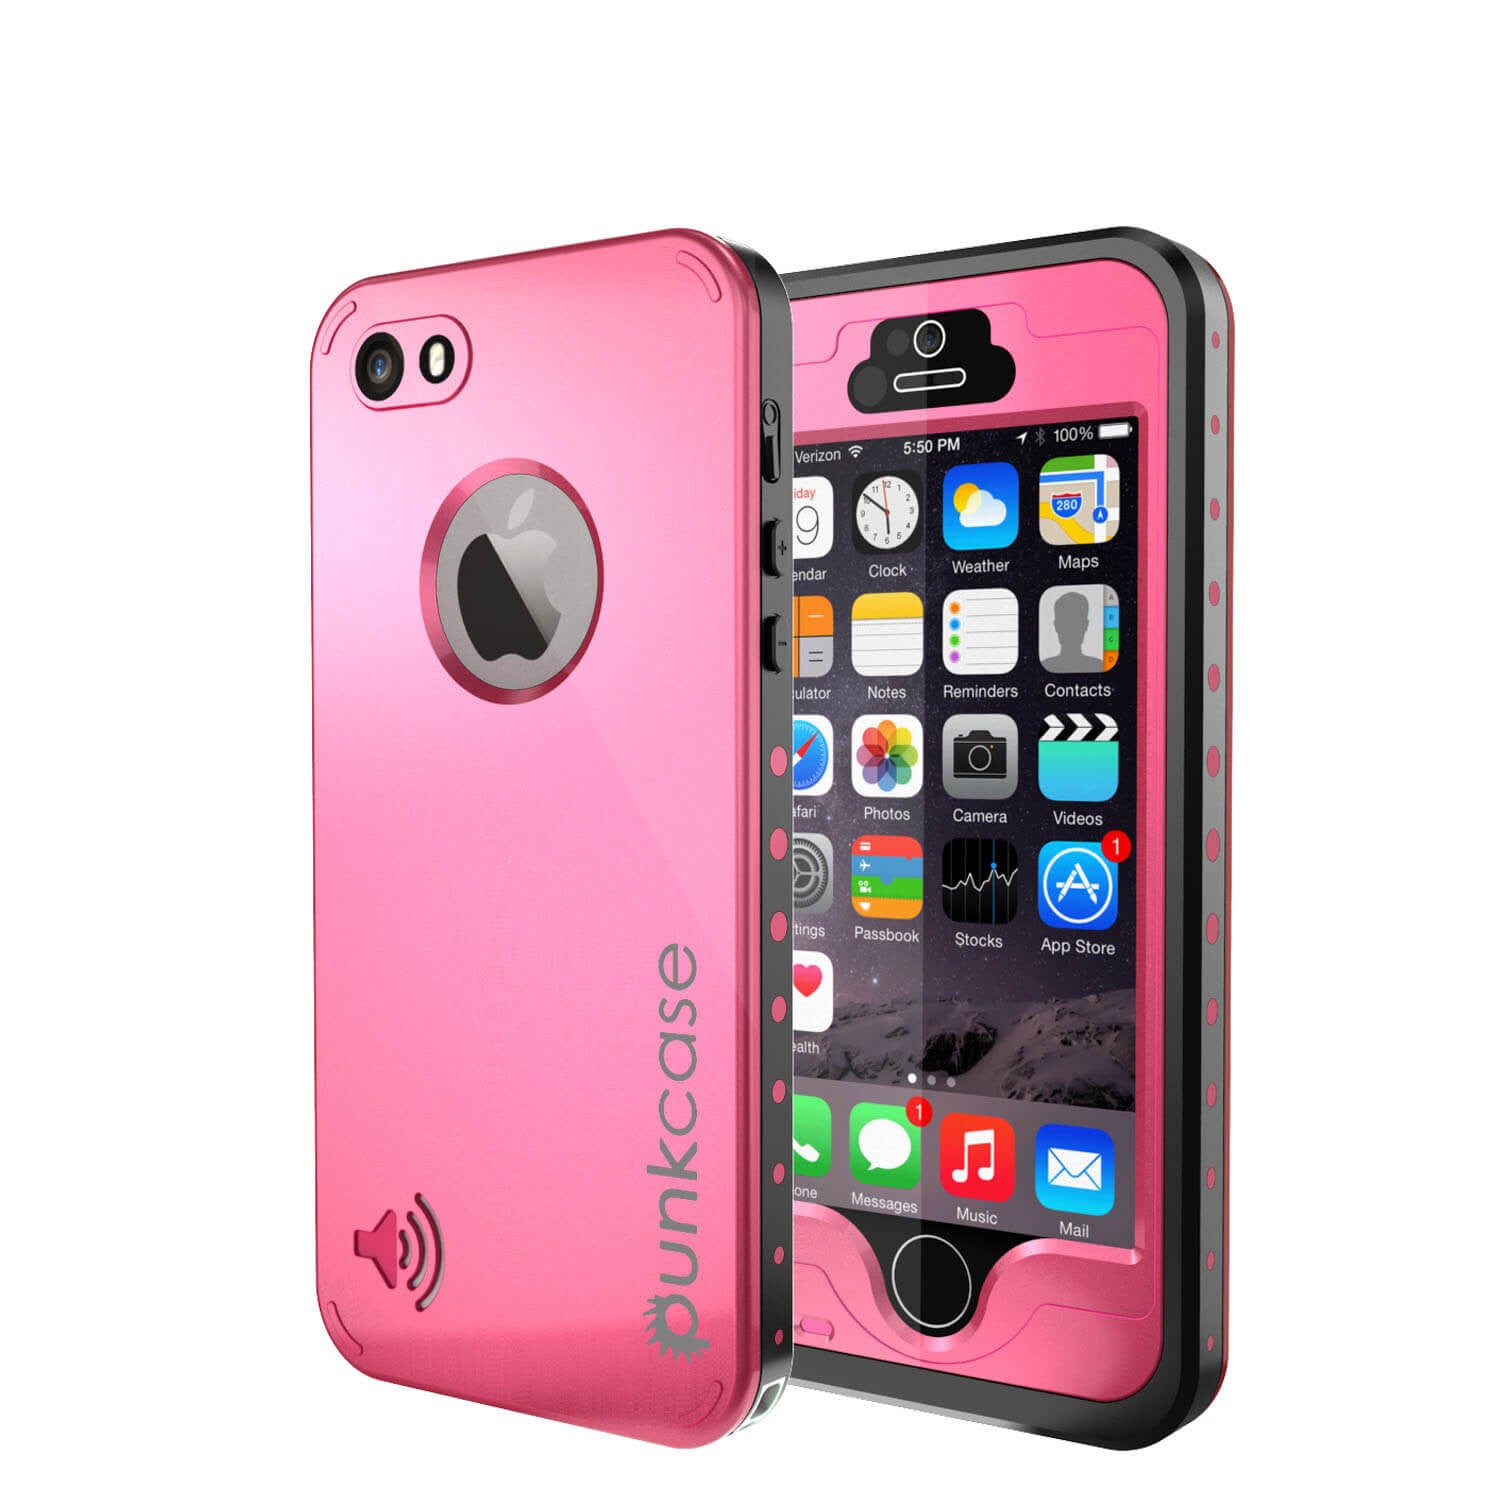 iPhone 5S/5 Waterproof Case, PunkCase StudStar Pink Case Water/Shock/Dirt Proof | Lifetime Warranty (Color in image: pink)